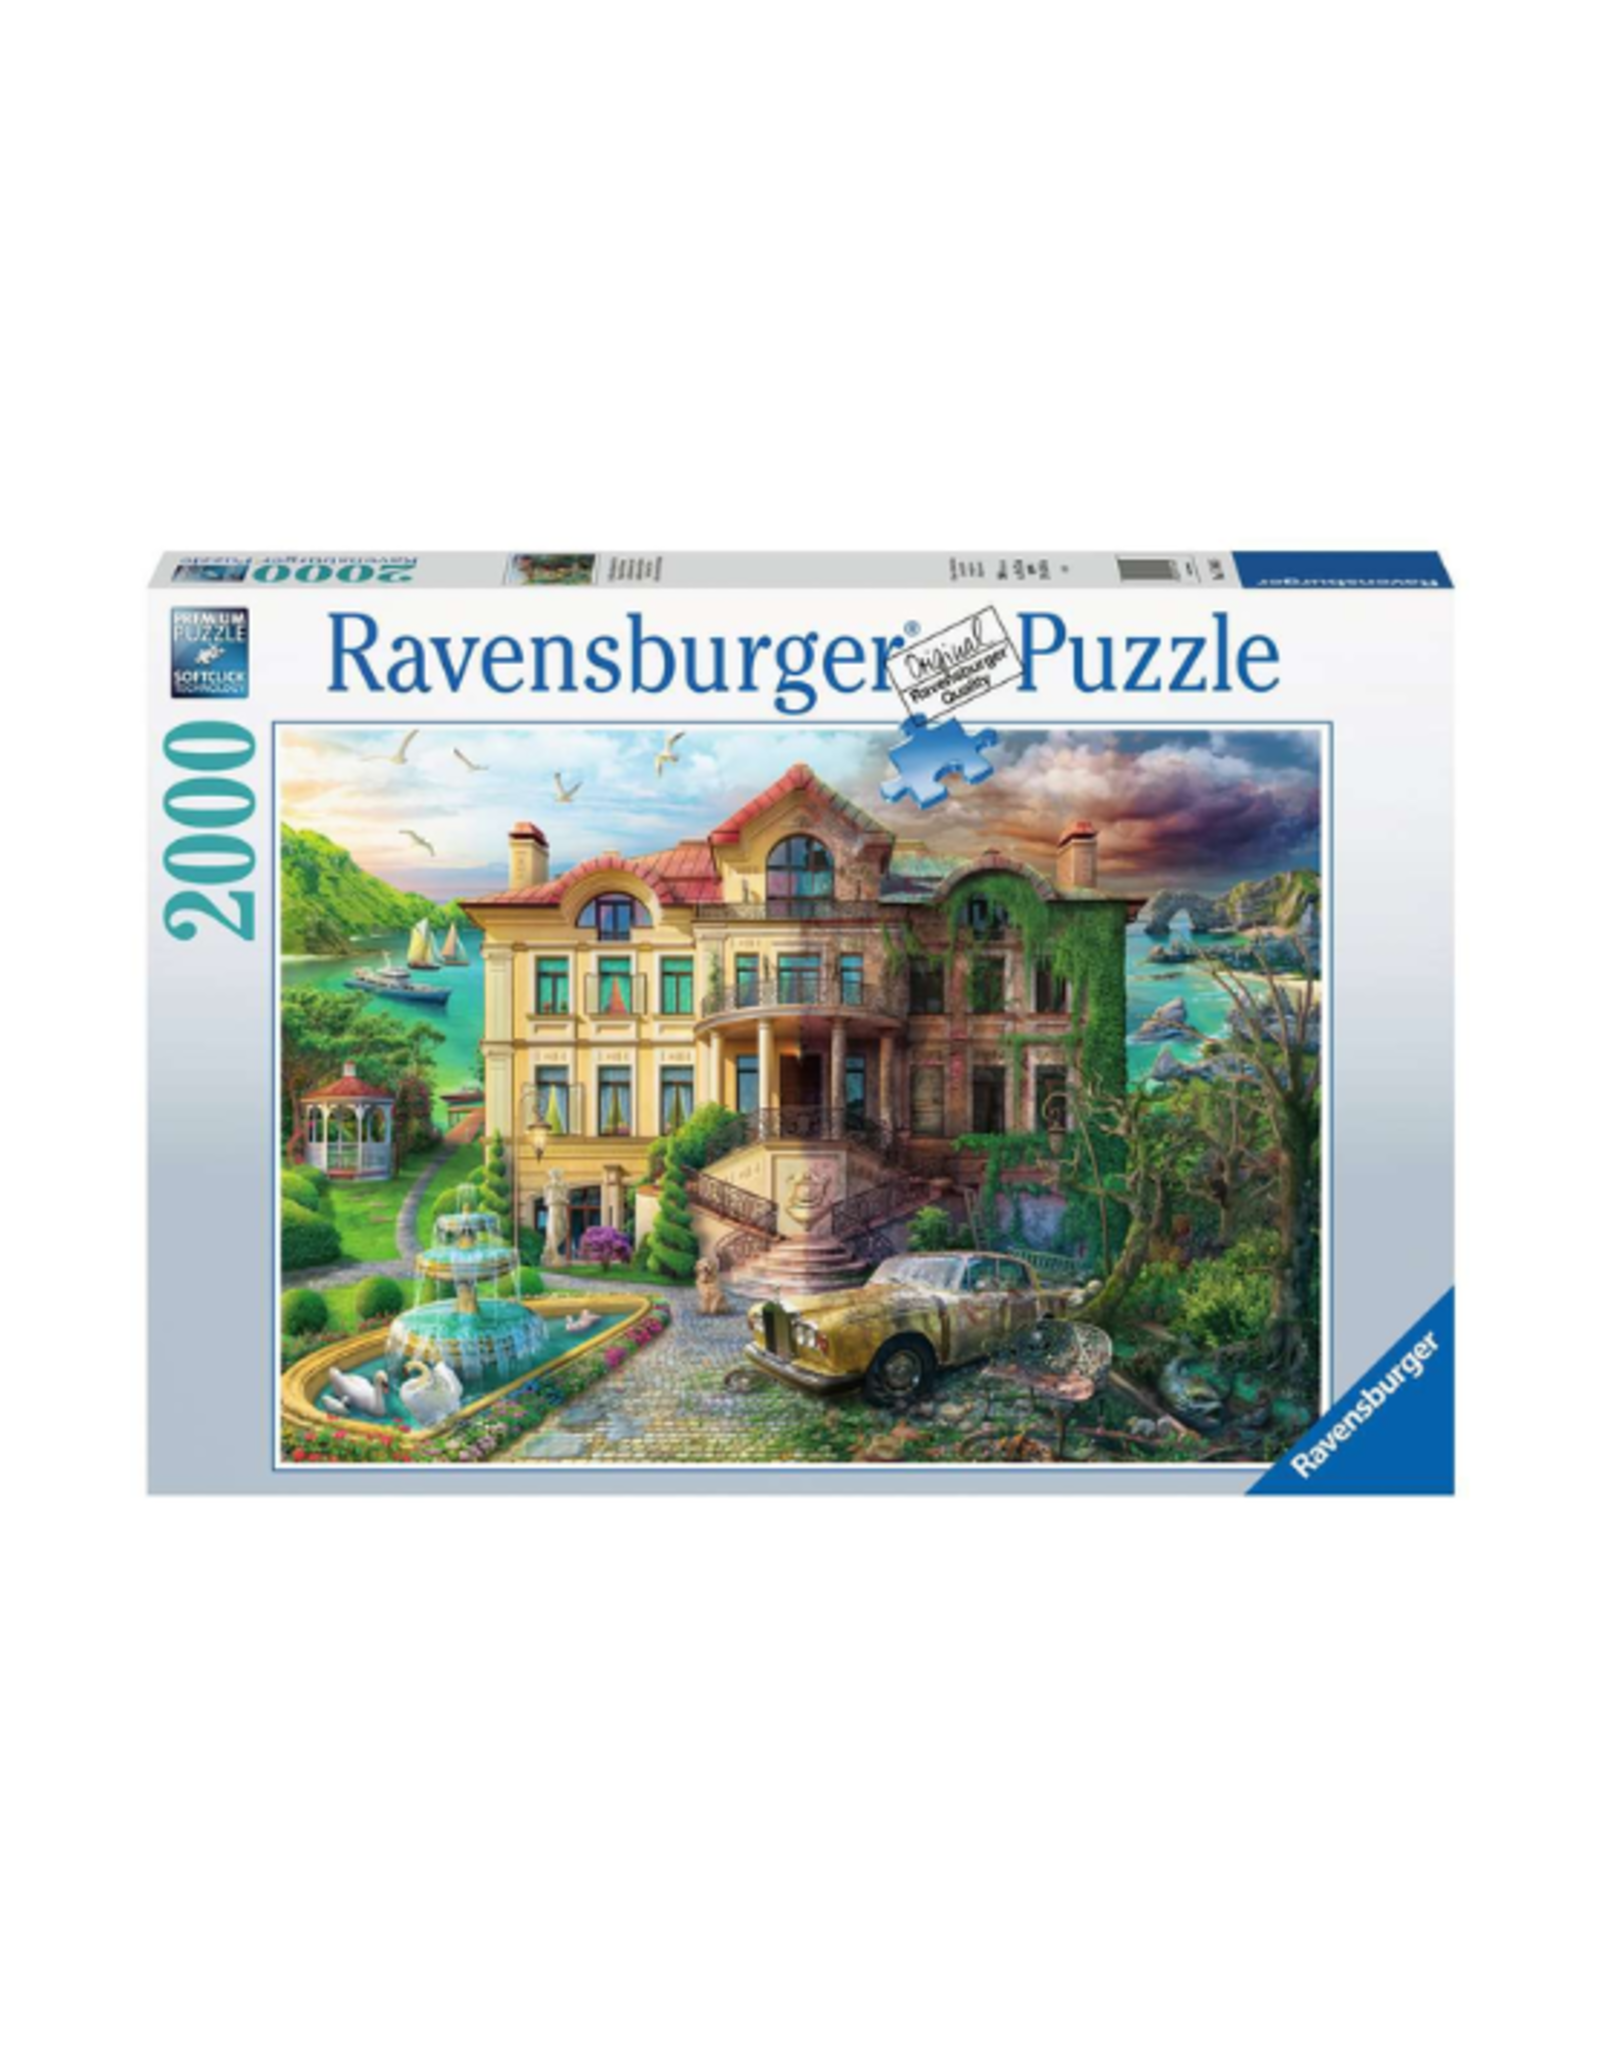 Ravensburger Ravensburger - 2000 pcs - Cove Manor Echoes